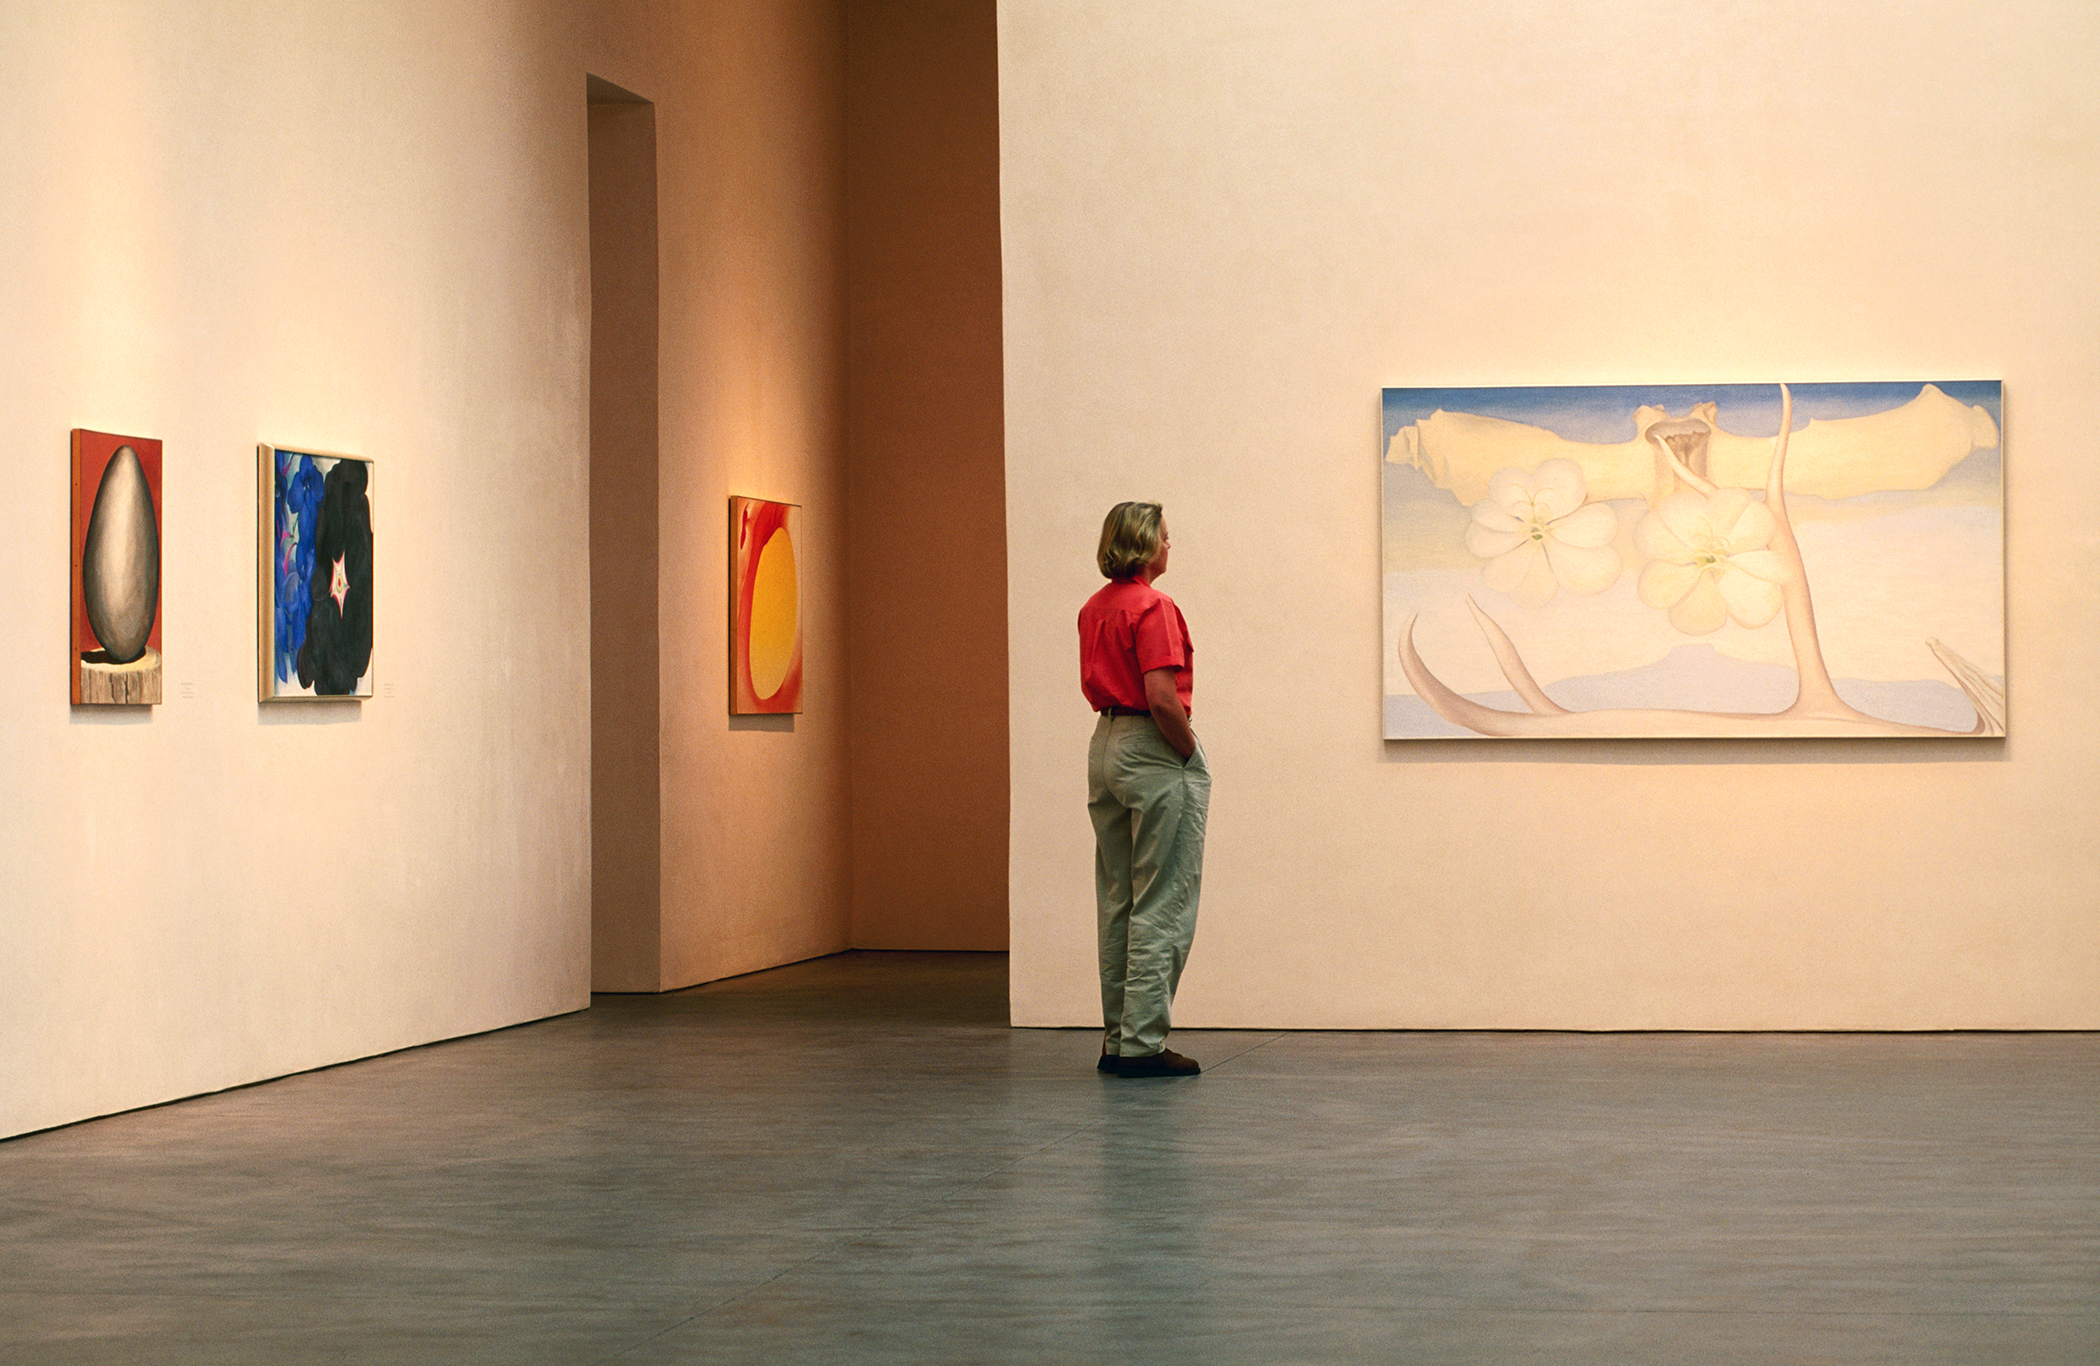 Georgia O'Keeffe Museum, Santa Fe, New Mexico